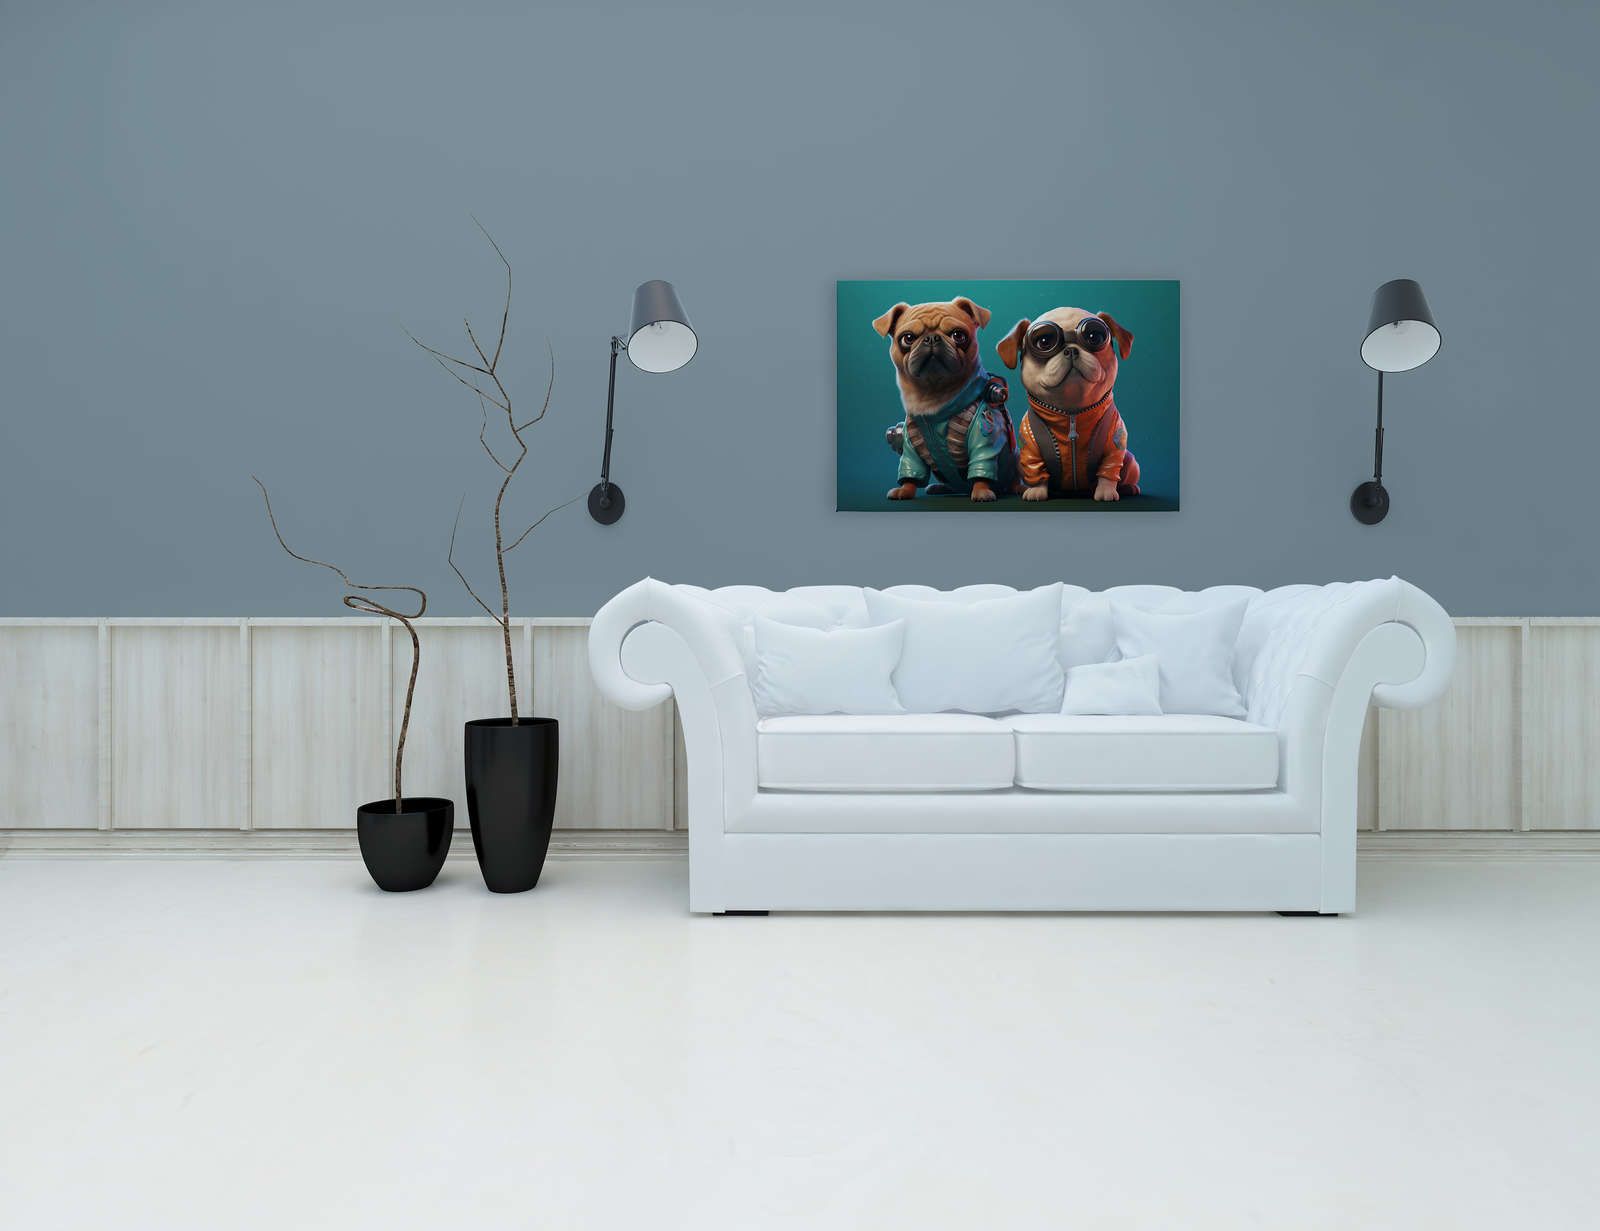             KI Canvas schilderij »Cute Dogs« - 90 cm x 60 cm
        